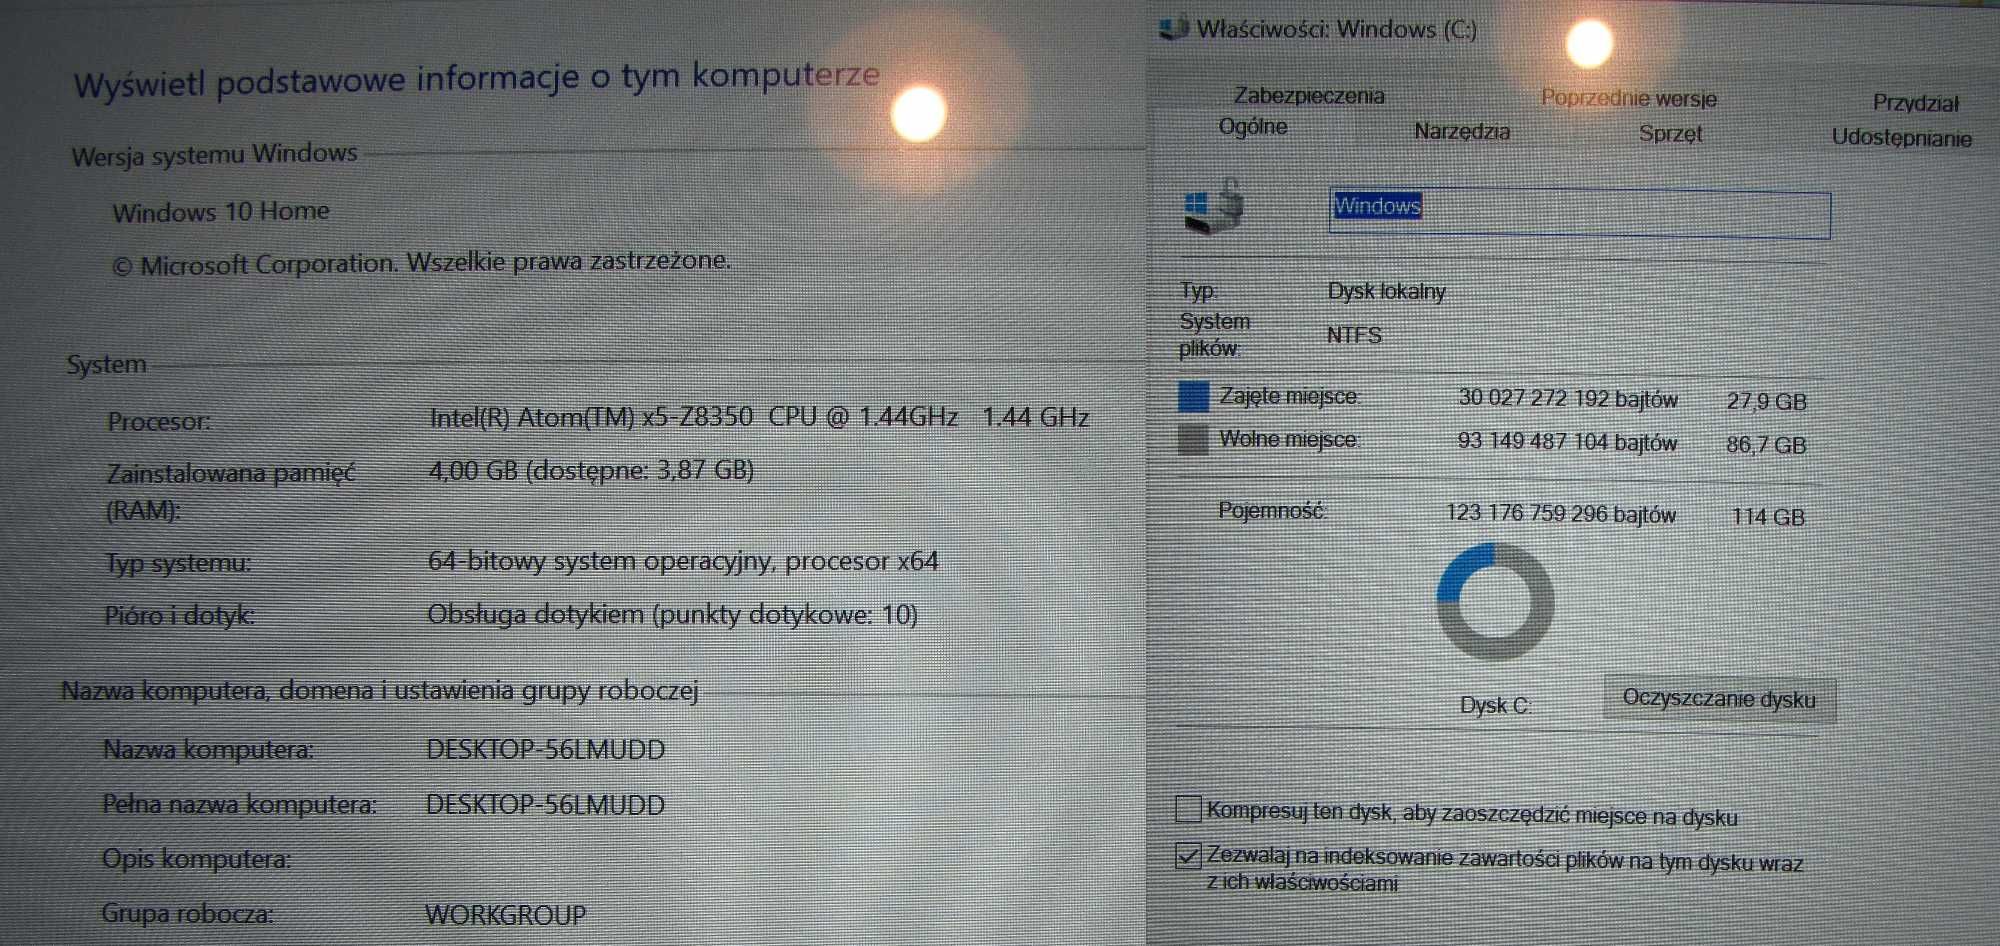 Laptop LENOVO Miix 320-10ICR, 4GB/128GB, 2w1, Gratis etui, Działa 99%.